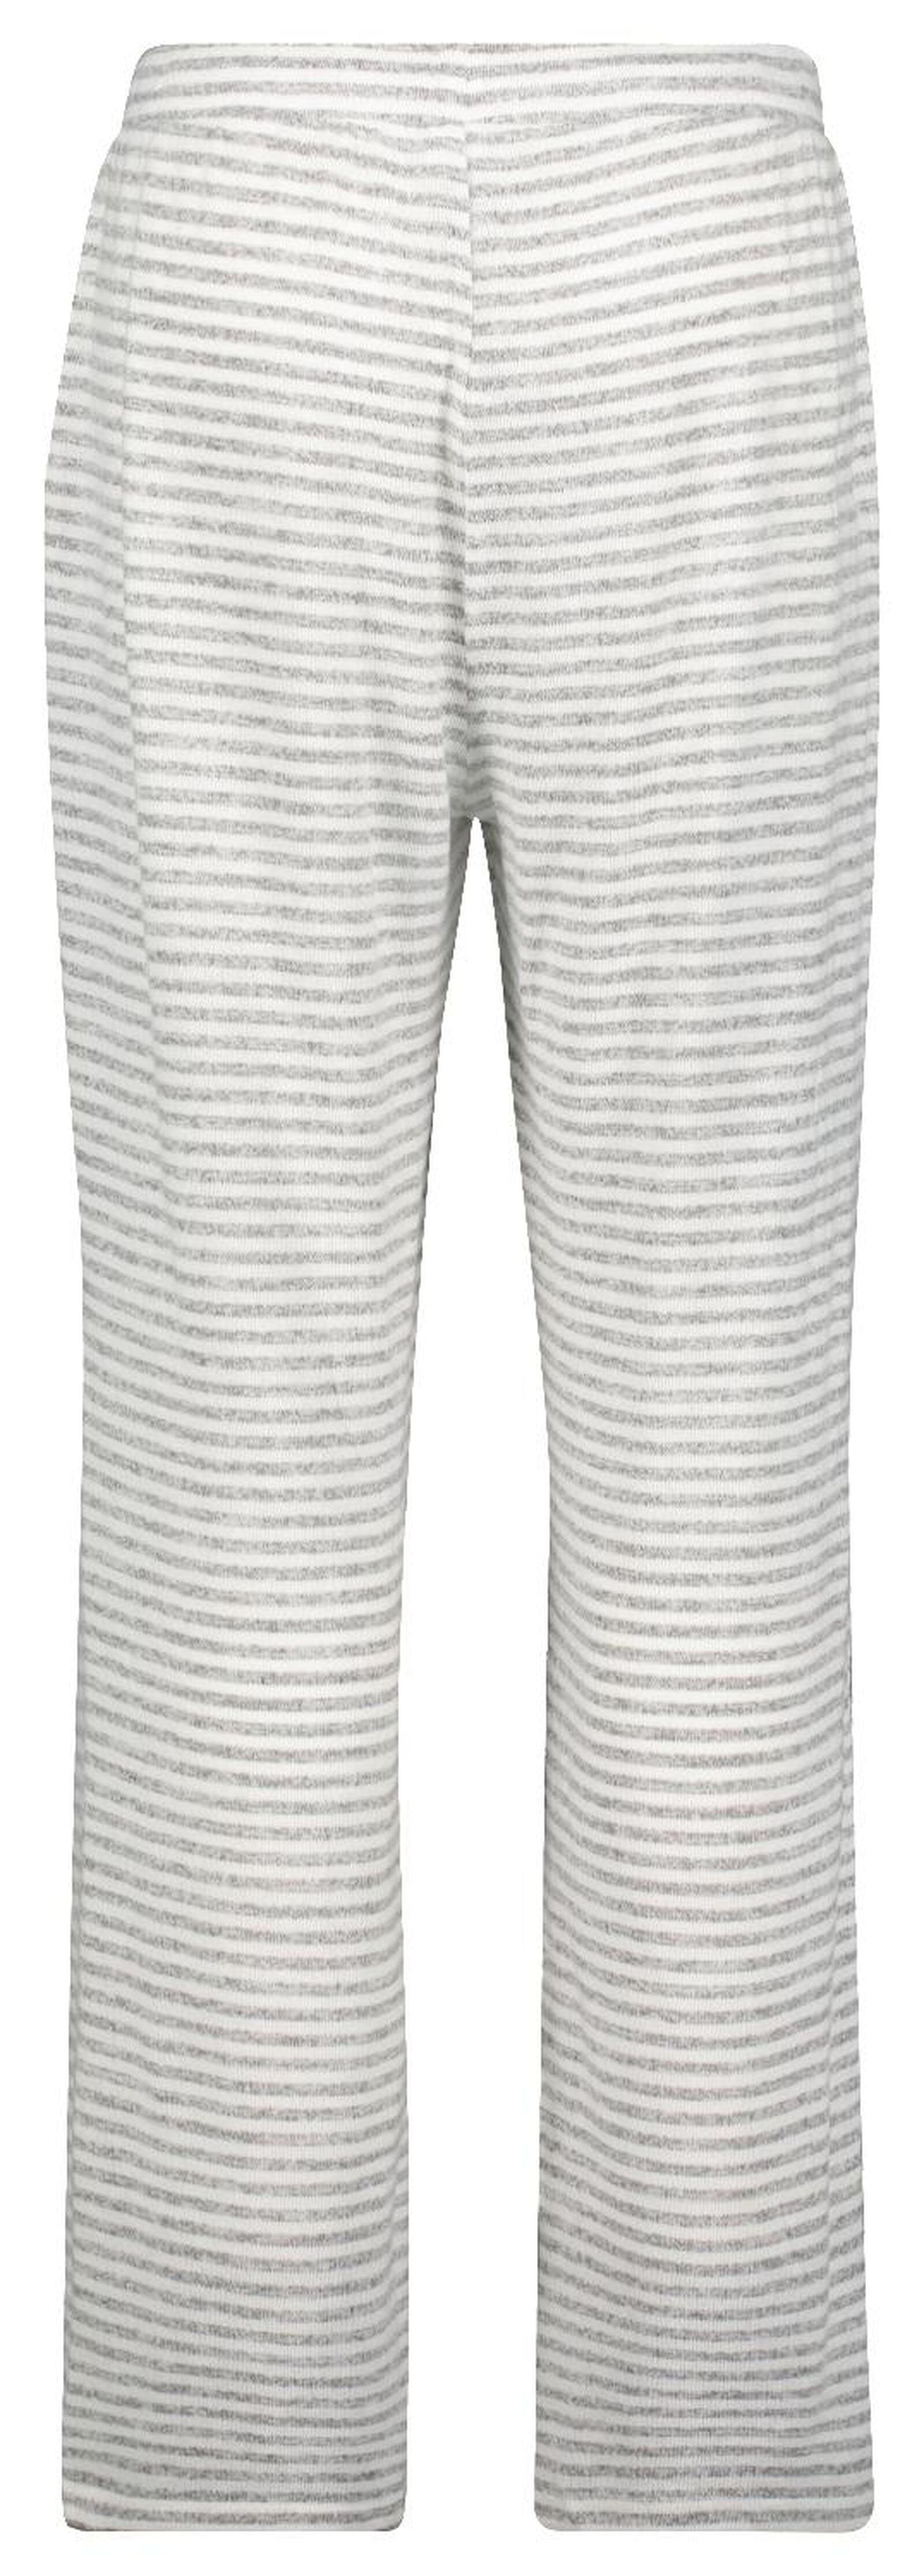 pantalon de pyjama femme viscose rayure gris chiné gris chiné - 1000025114 - HEMA